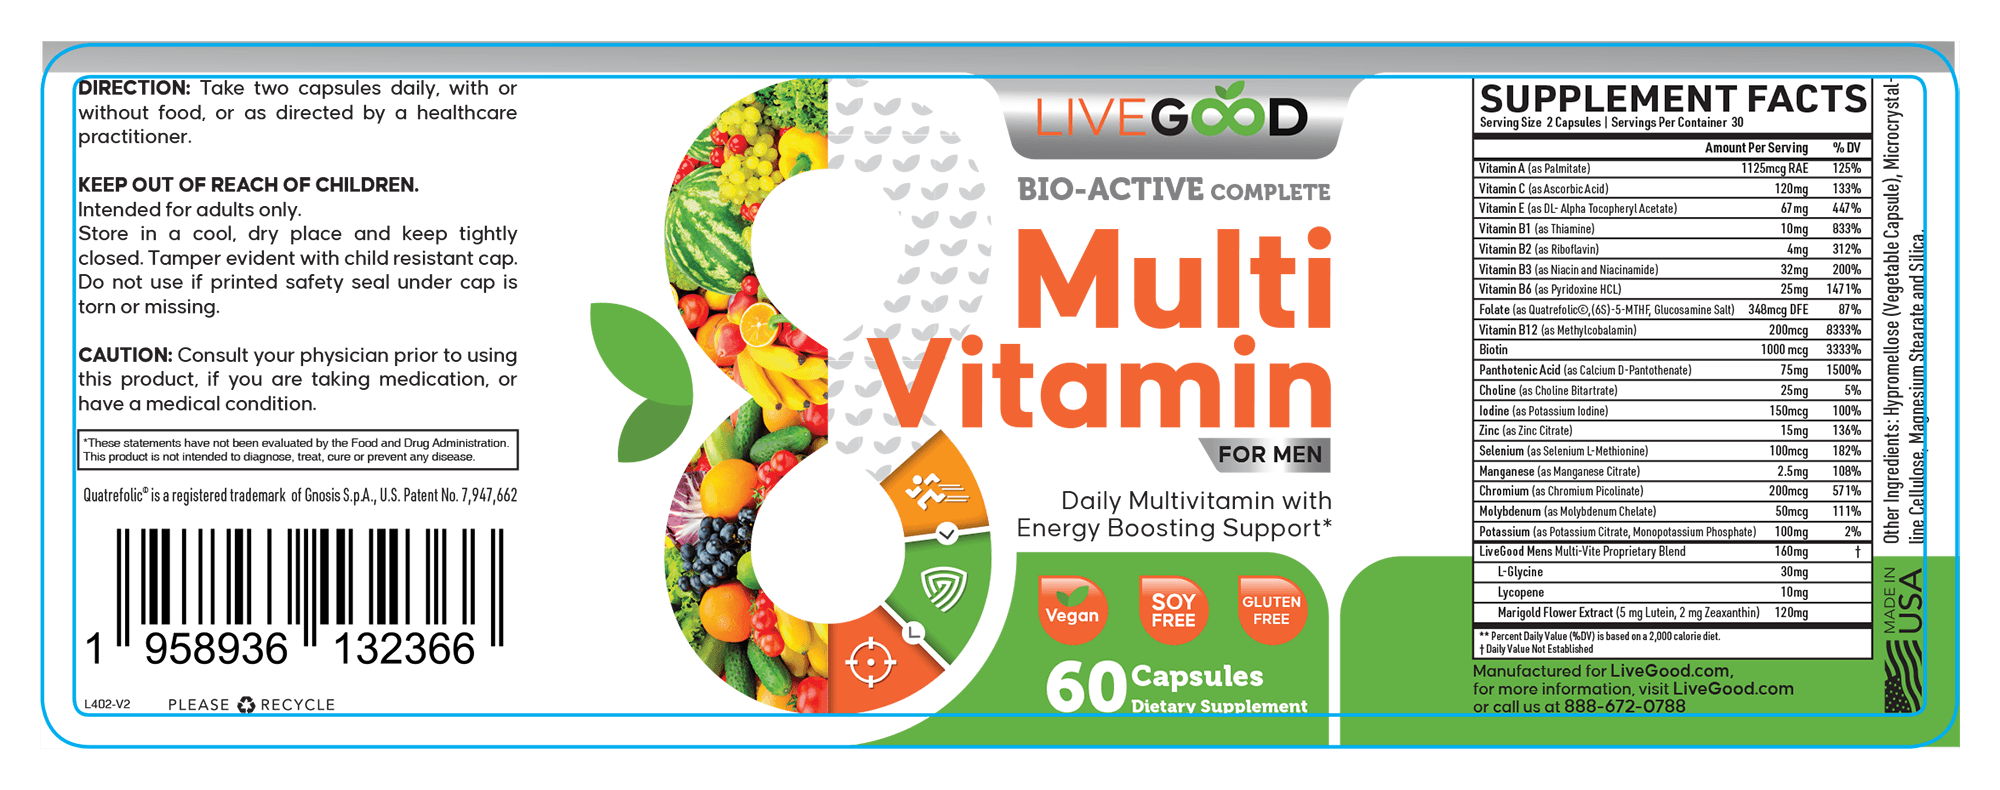 LIVEGOOD Bio-Active Complete Multi-Vitamin for Men Review